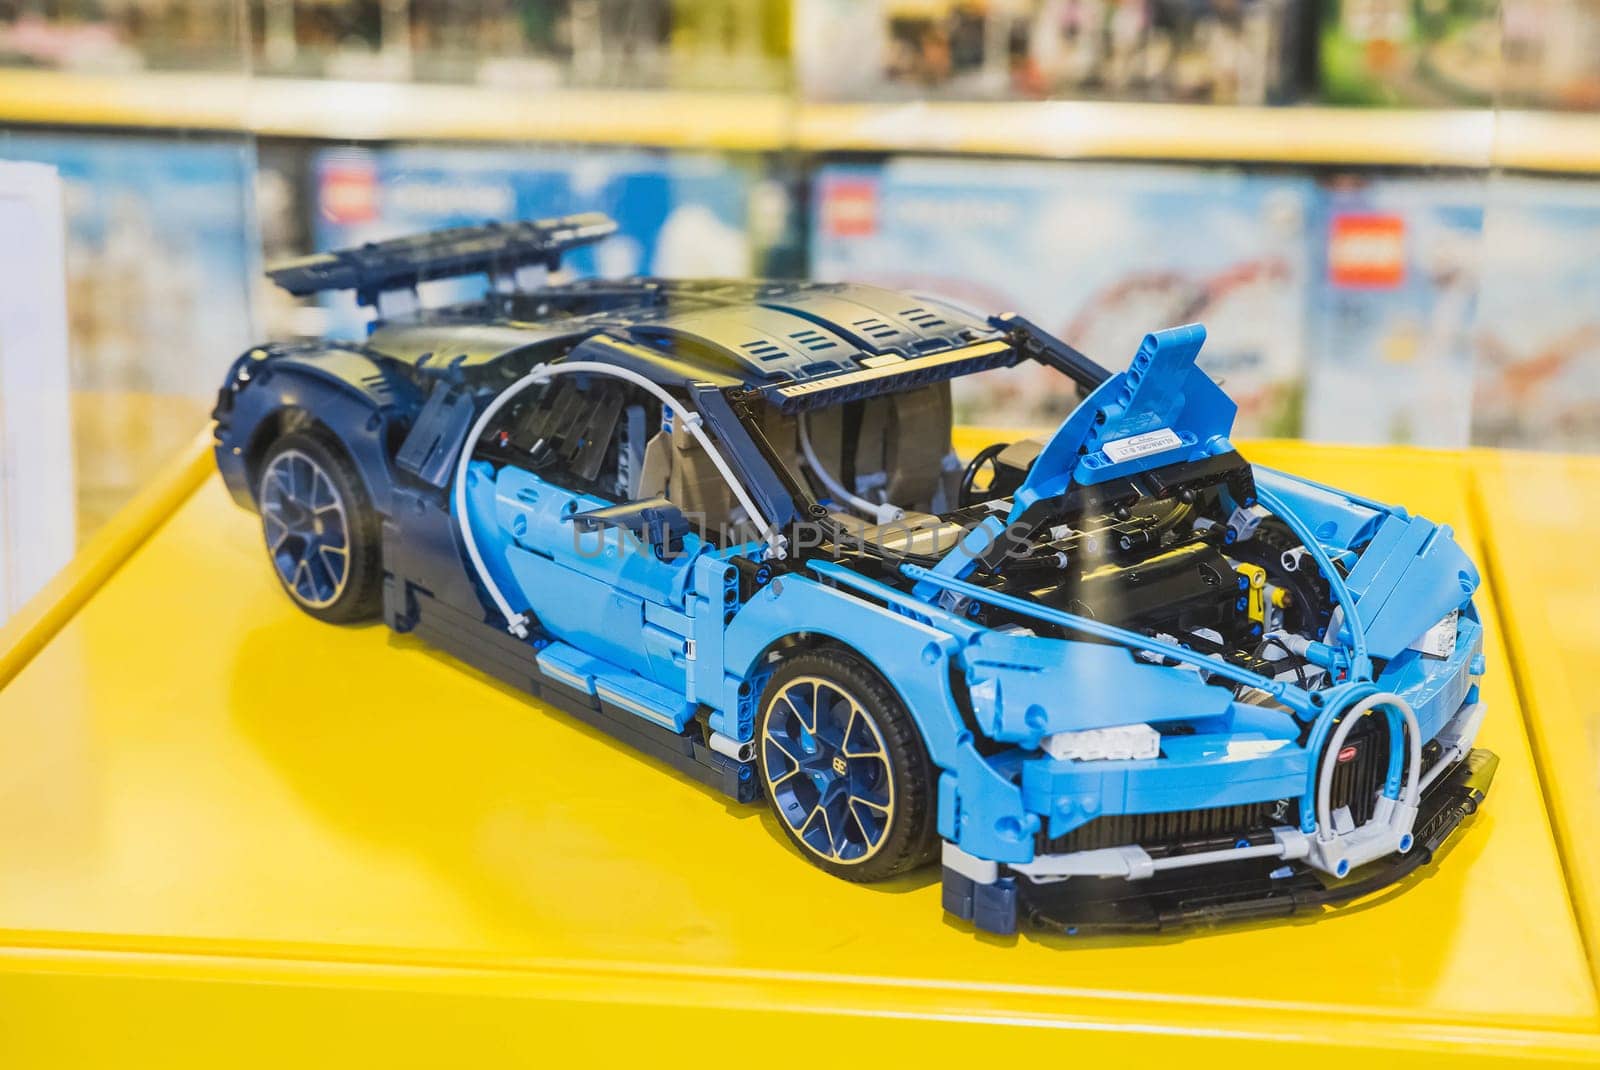 Billund, Denmark, July 2018: Racing toy car at the gift shop in Legoland